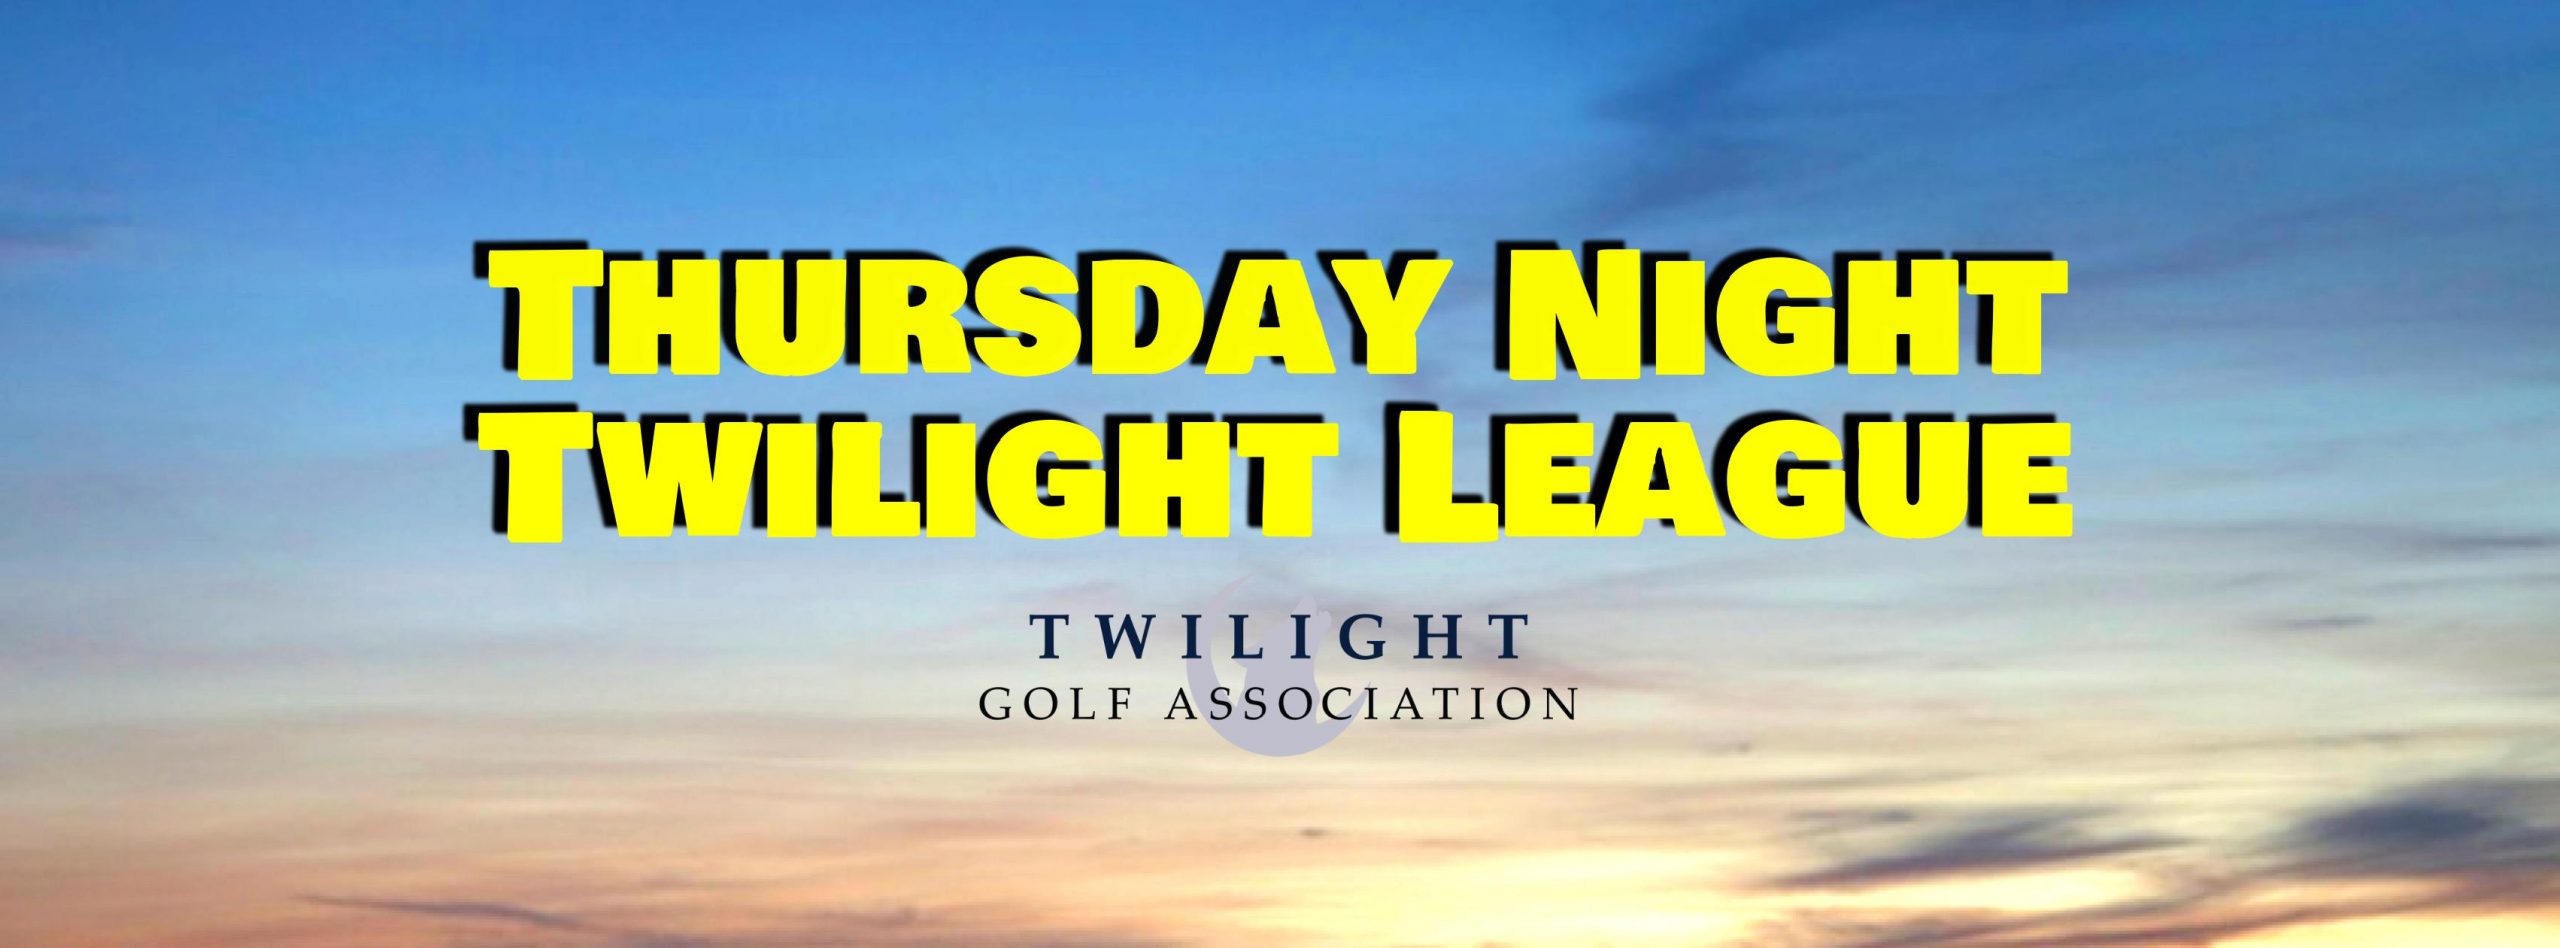 Thursday Twilight League at Northwest Golf Course